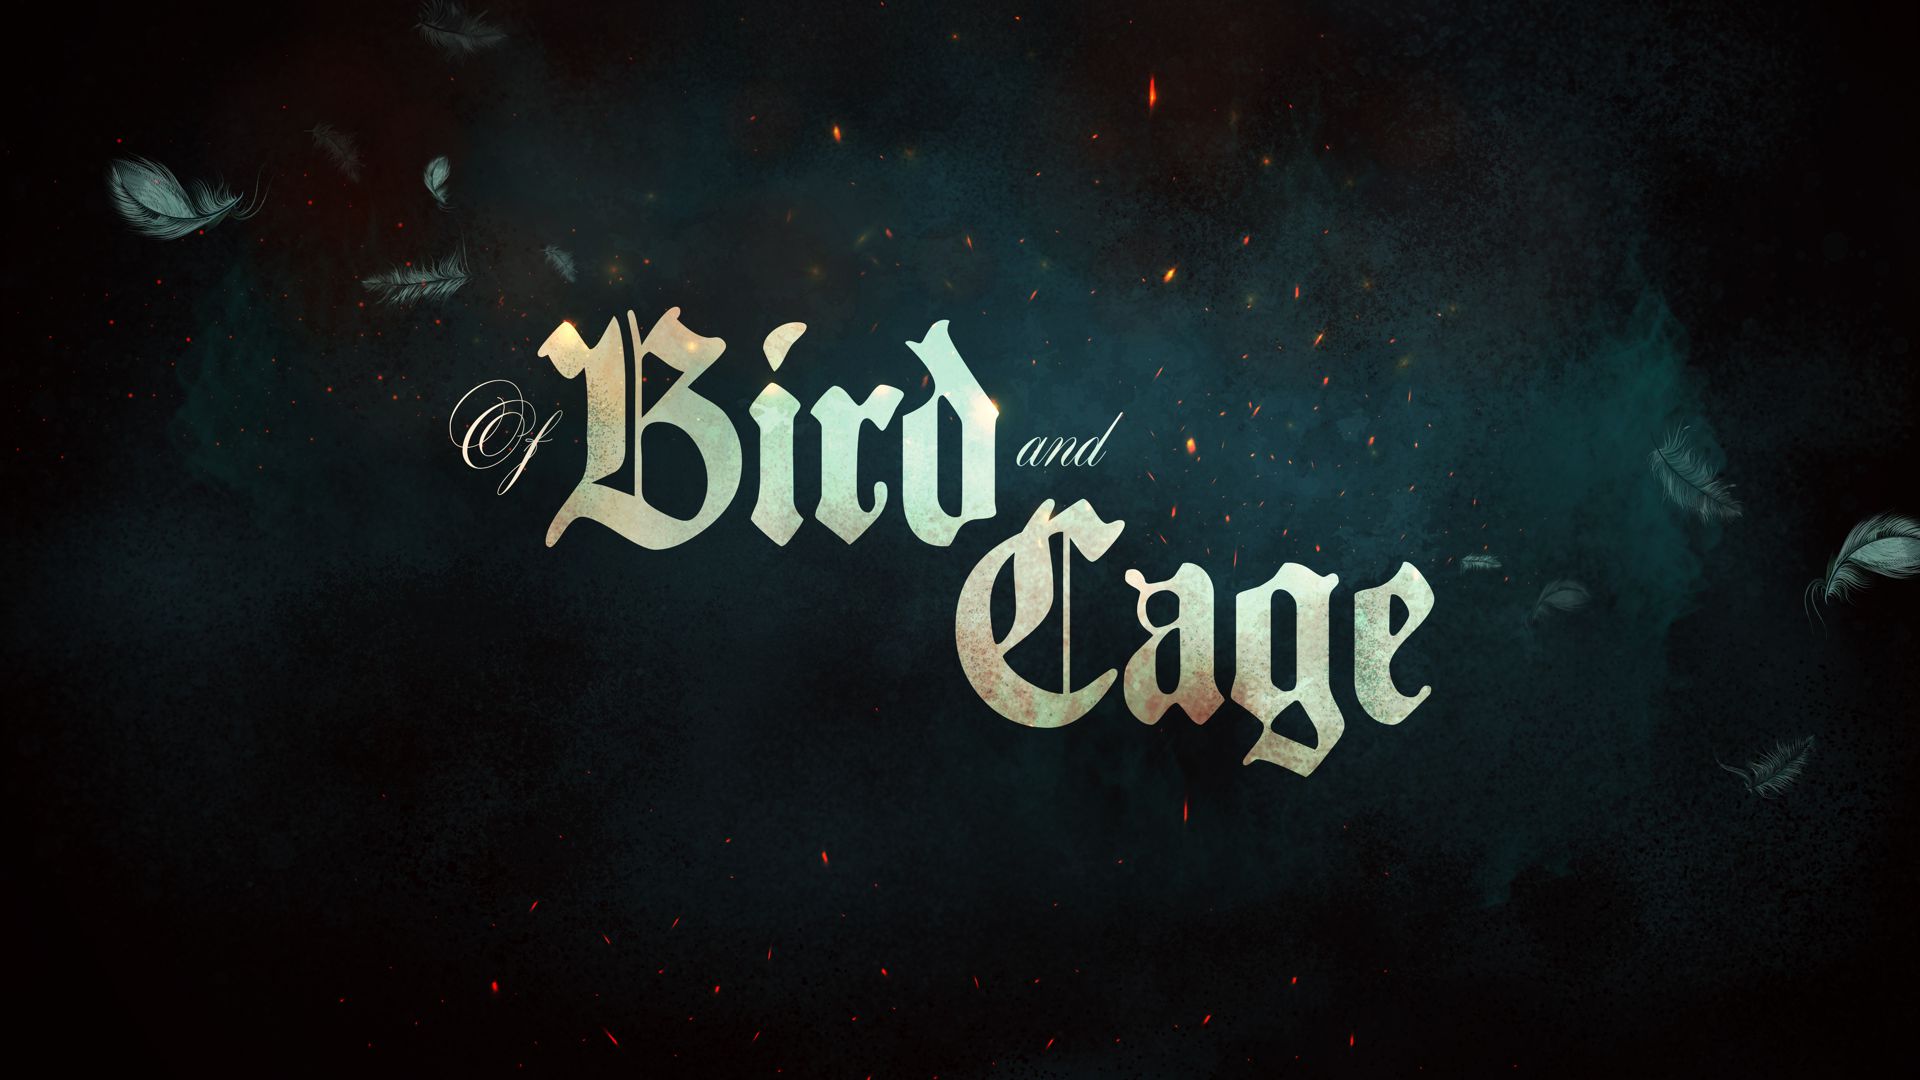 Of Bird and Cage Principal